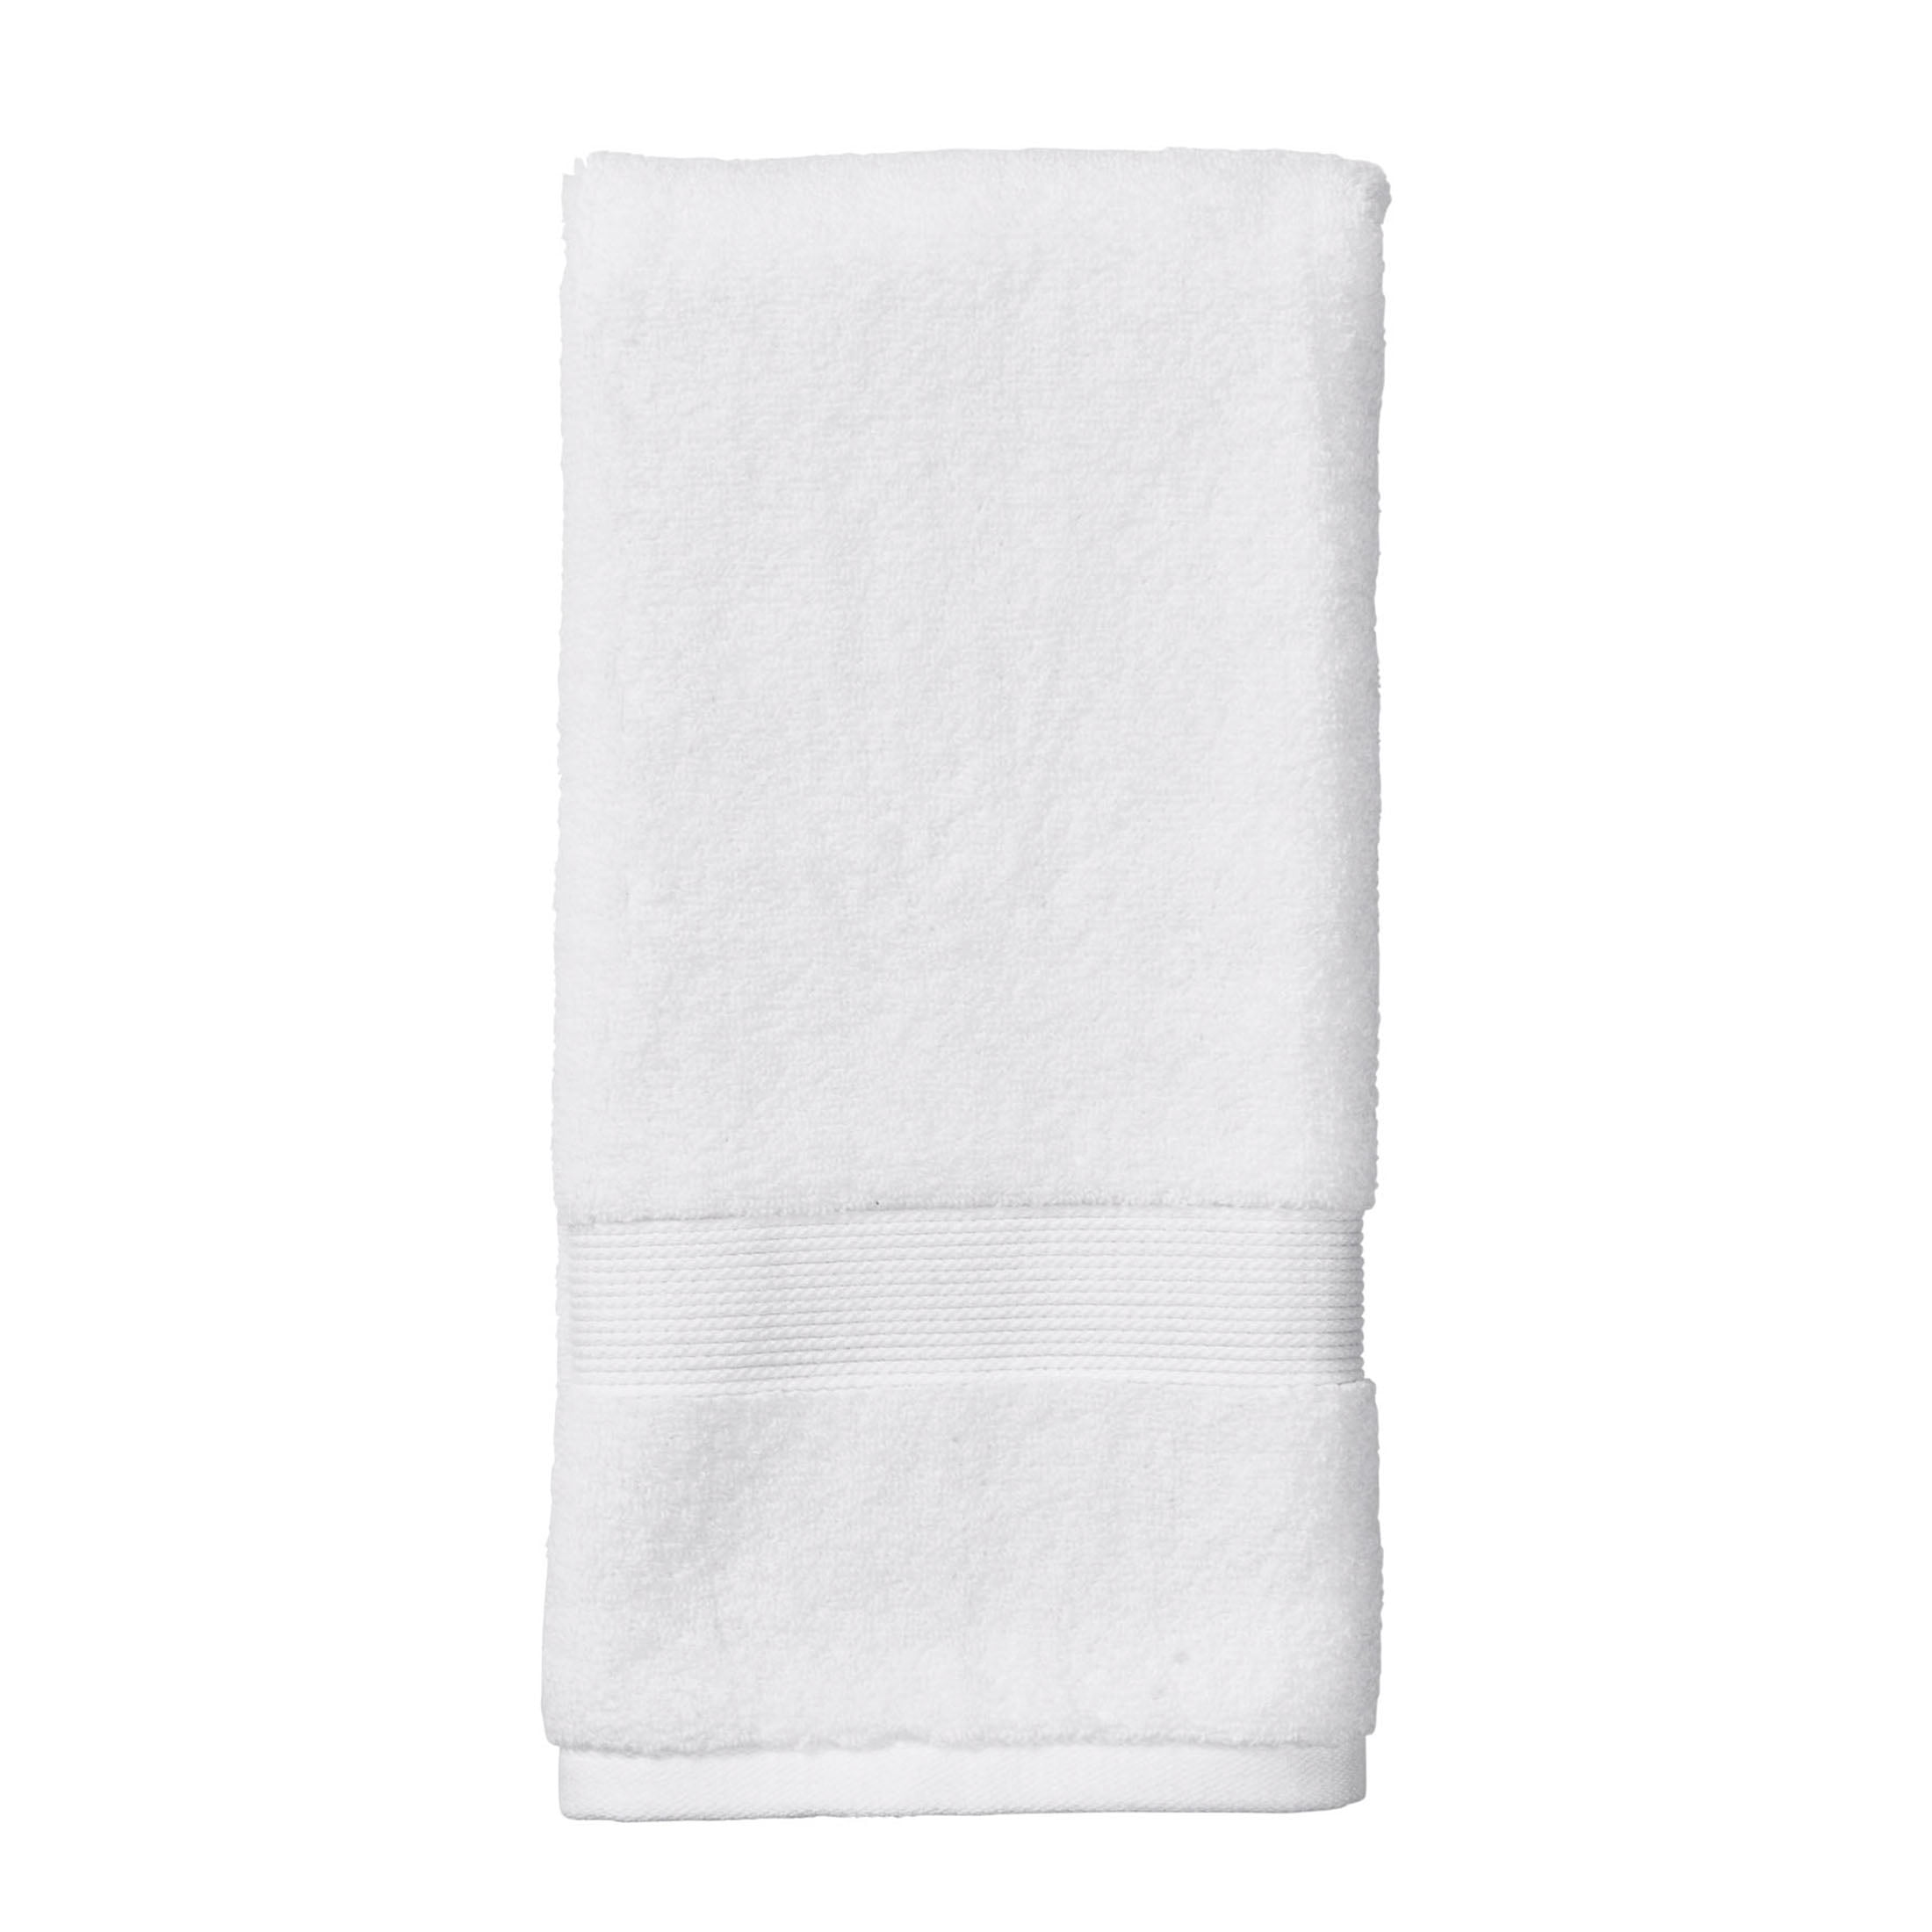 Better Homes & Gardens Signature Soft Hand Towel, White